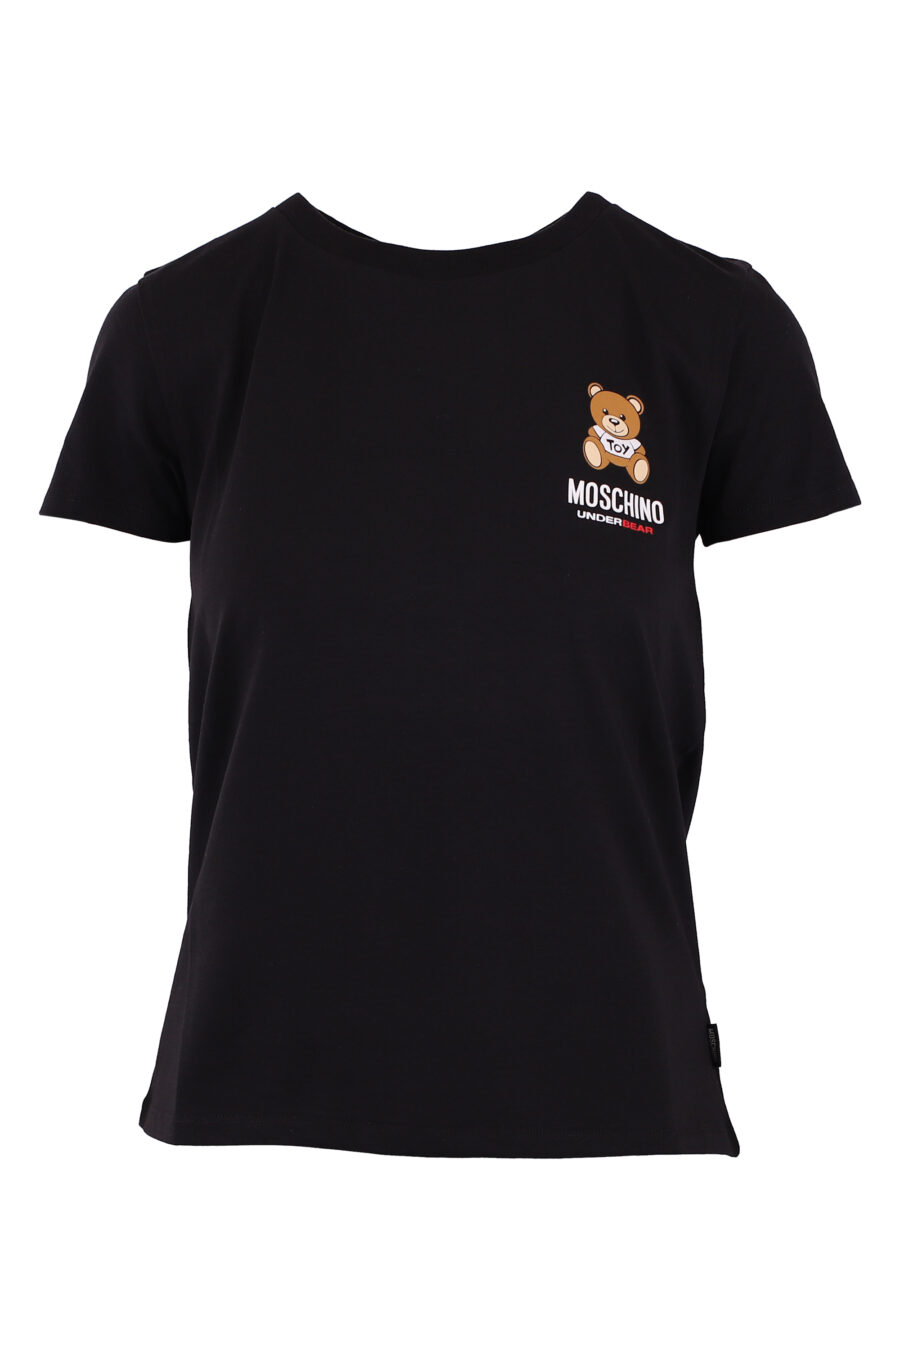 Camiseta negra con logo oso pequeño - IMG 6202